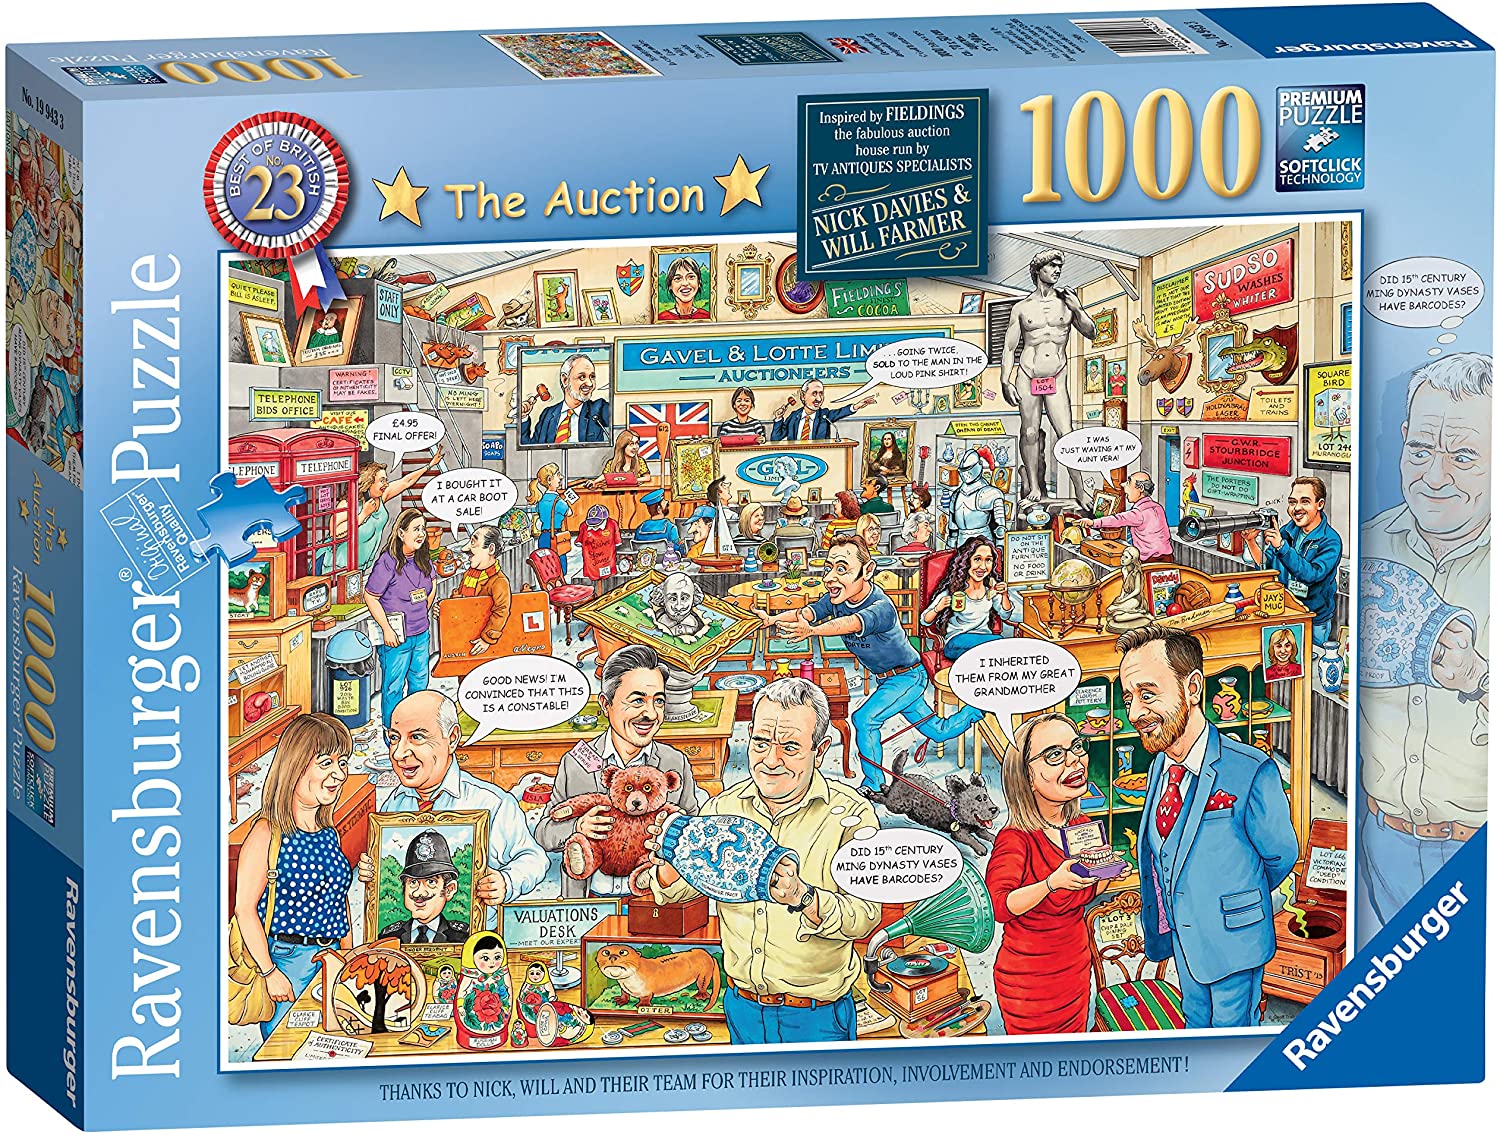 The Auction (No 23) 1000 Piece Jigsaw Puzzle